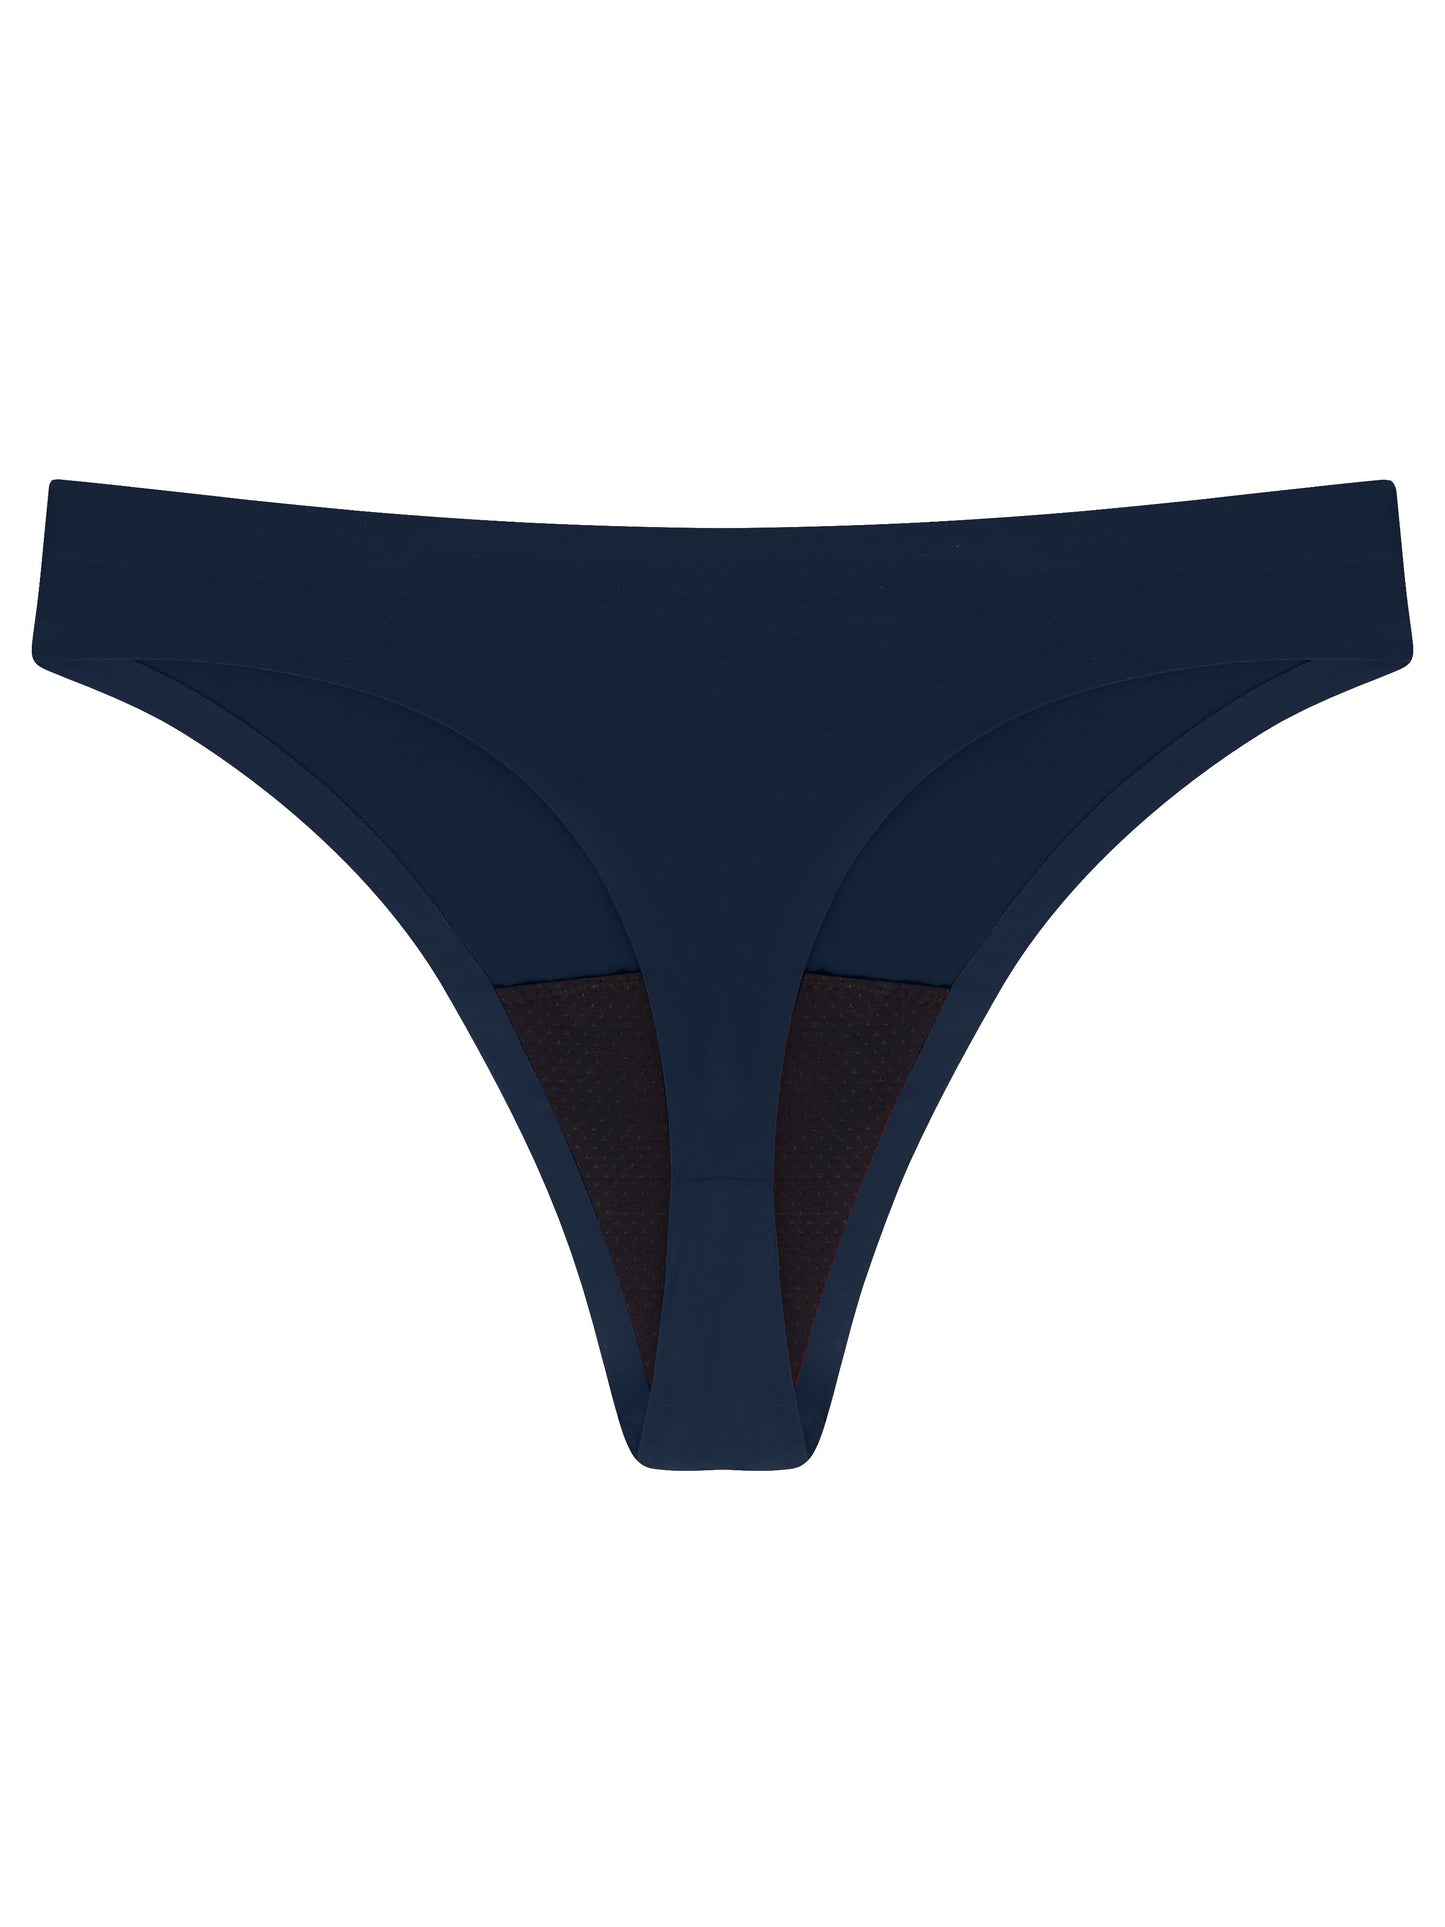 Imaara Feminine Period Underwear Inclusive Knickers. Product Padma Admiral Navy